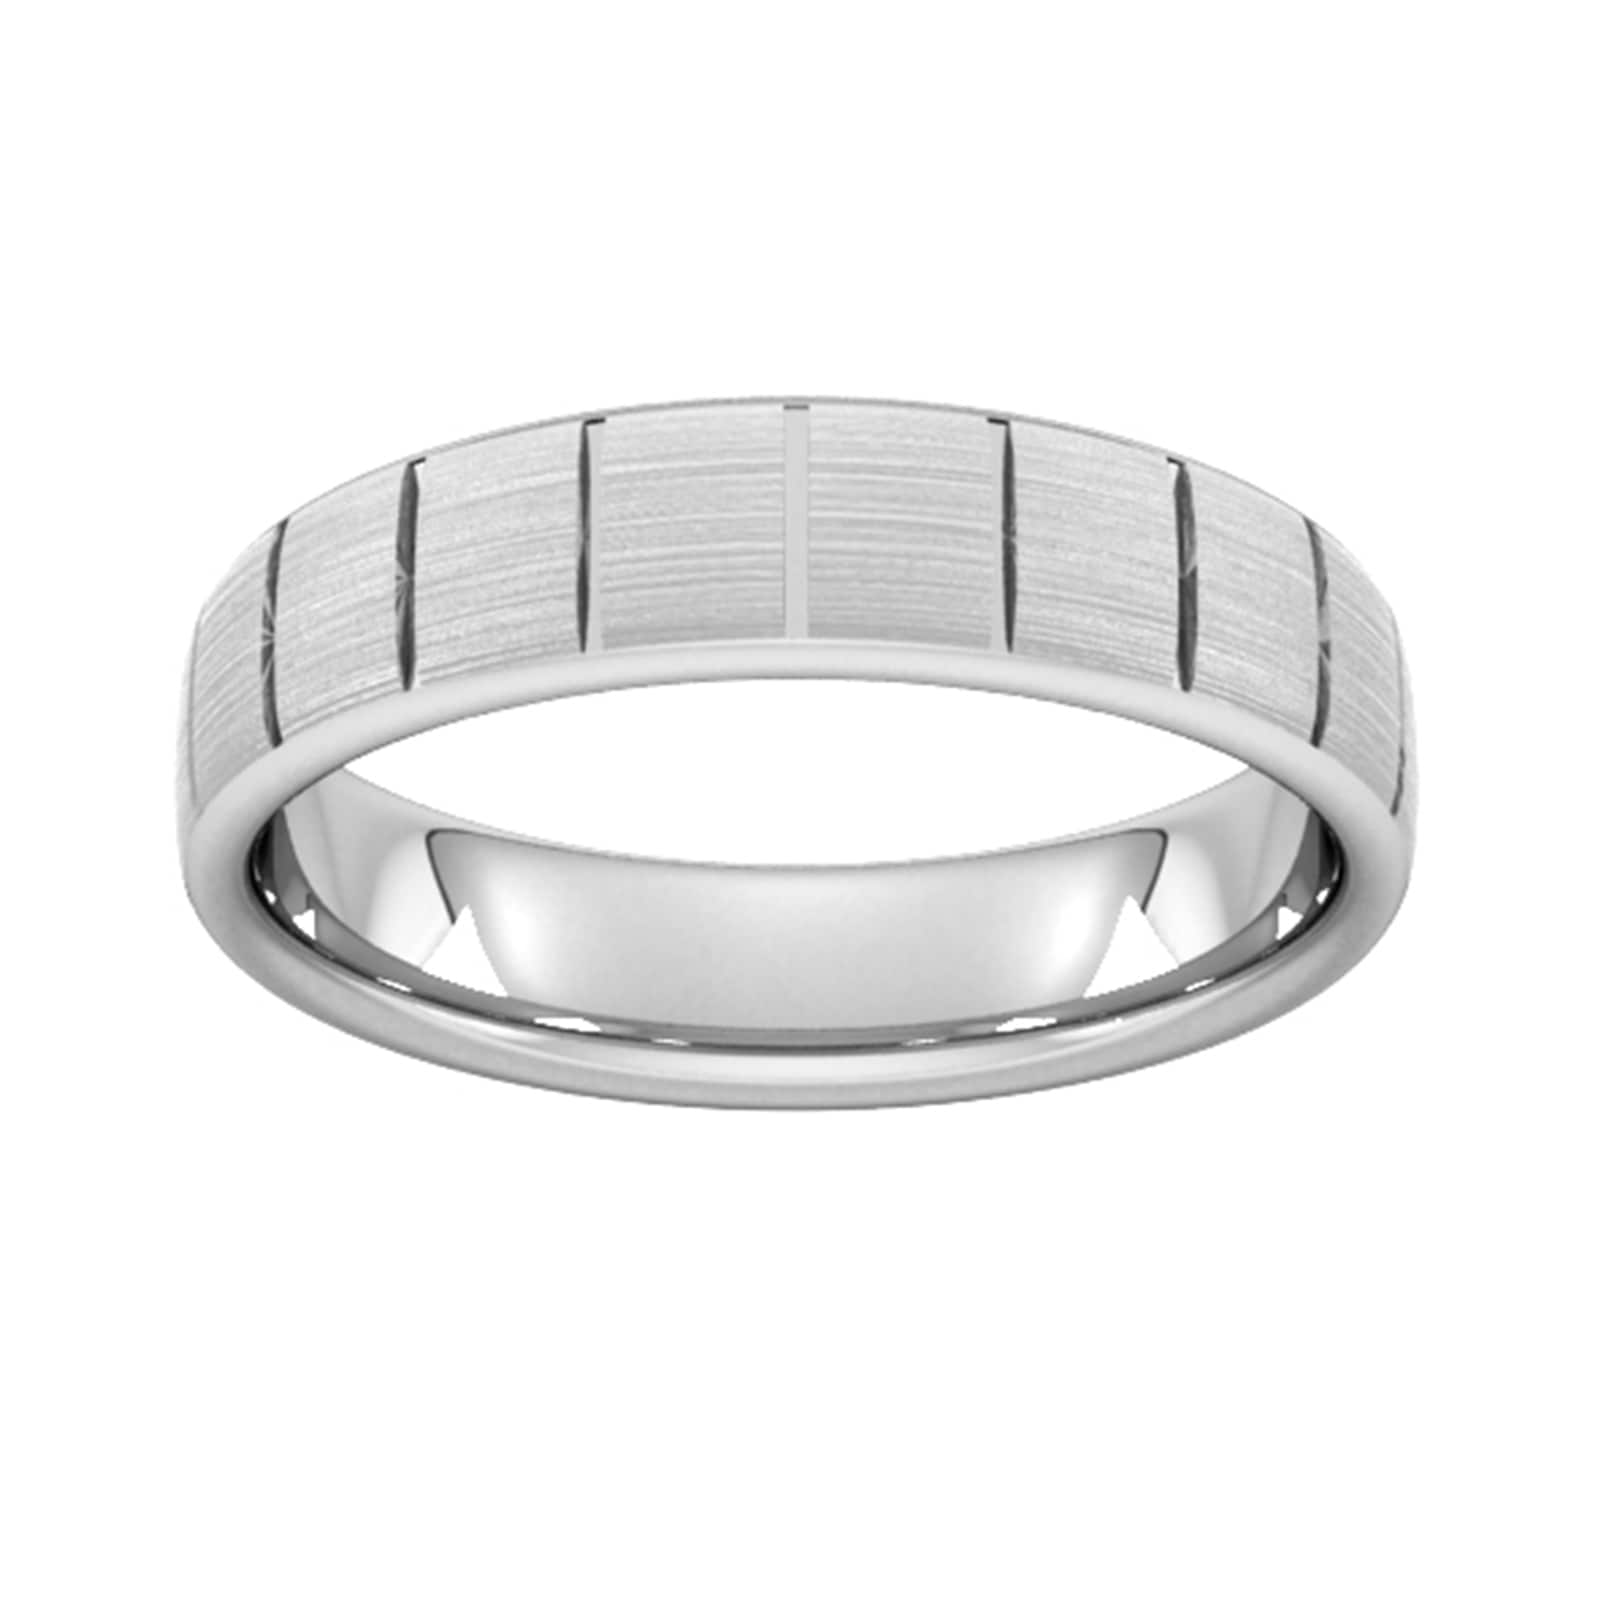 5mm Slight Court Heavy Vertical Lines Wedding Ring In 950 Palladium - Ring Size L